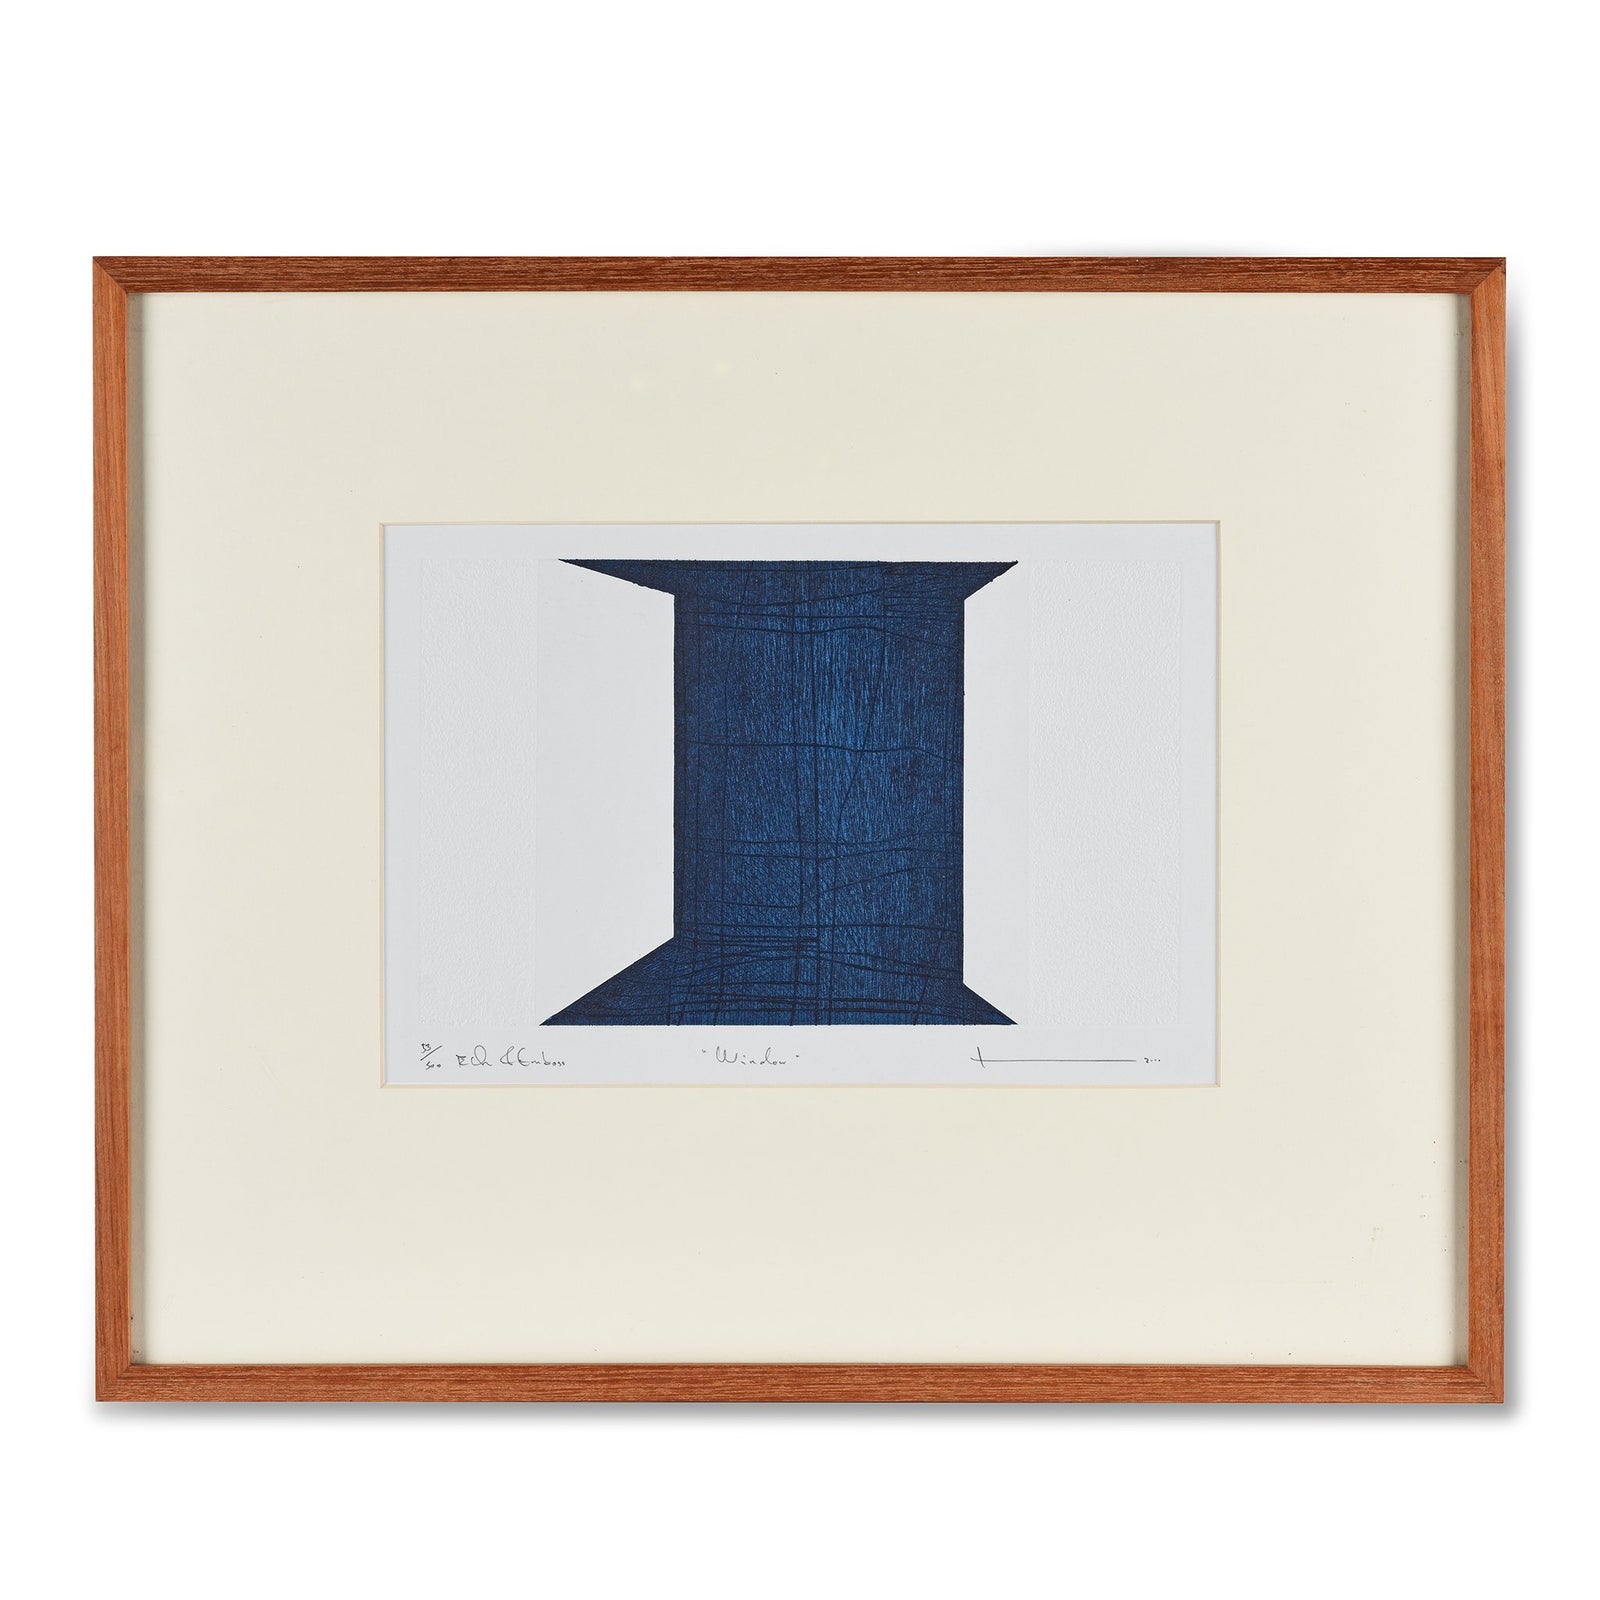 SALE -Framed Indigo Textile Lithograph - 45.5 x 56 cm - AUK182